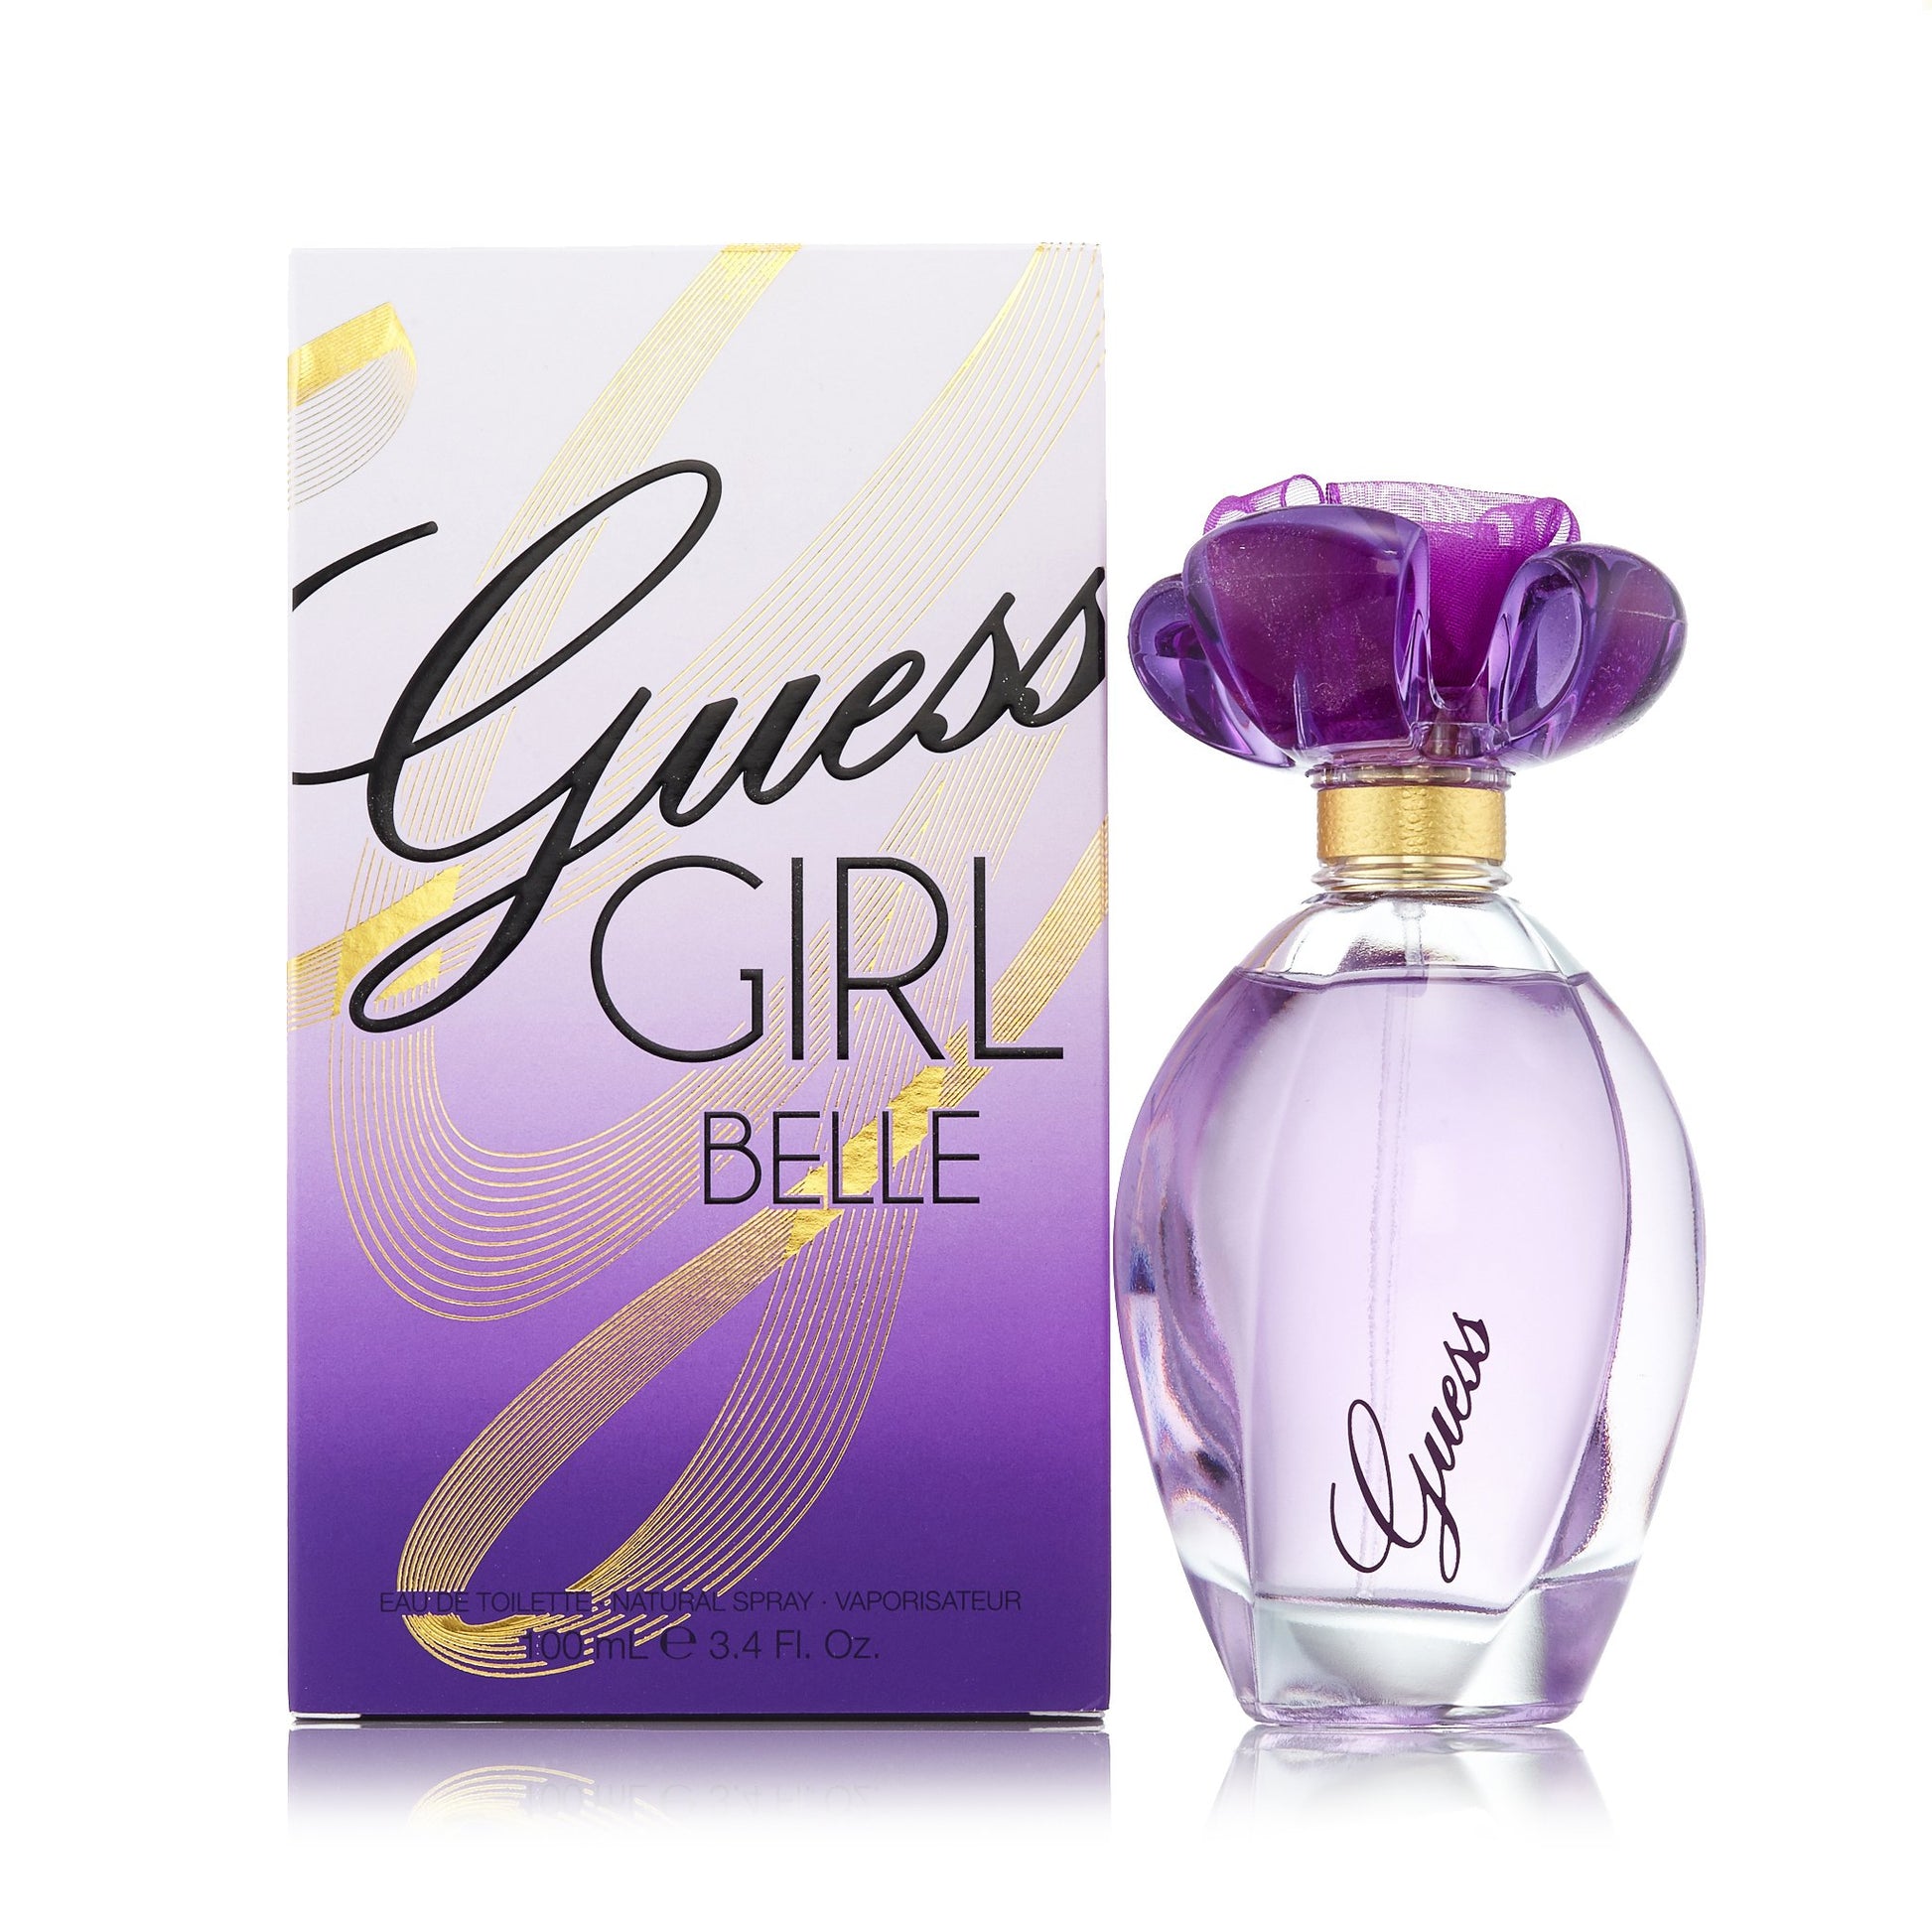 Guess Girl Belle Eau de Toilette Spray for Women by Guess 3.4 oz. Click to open in modal